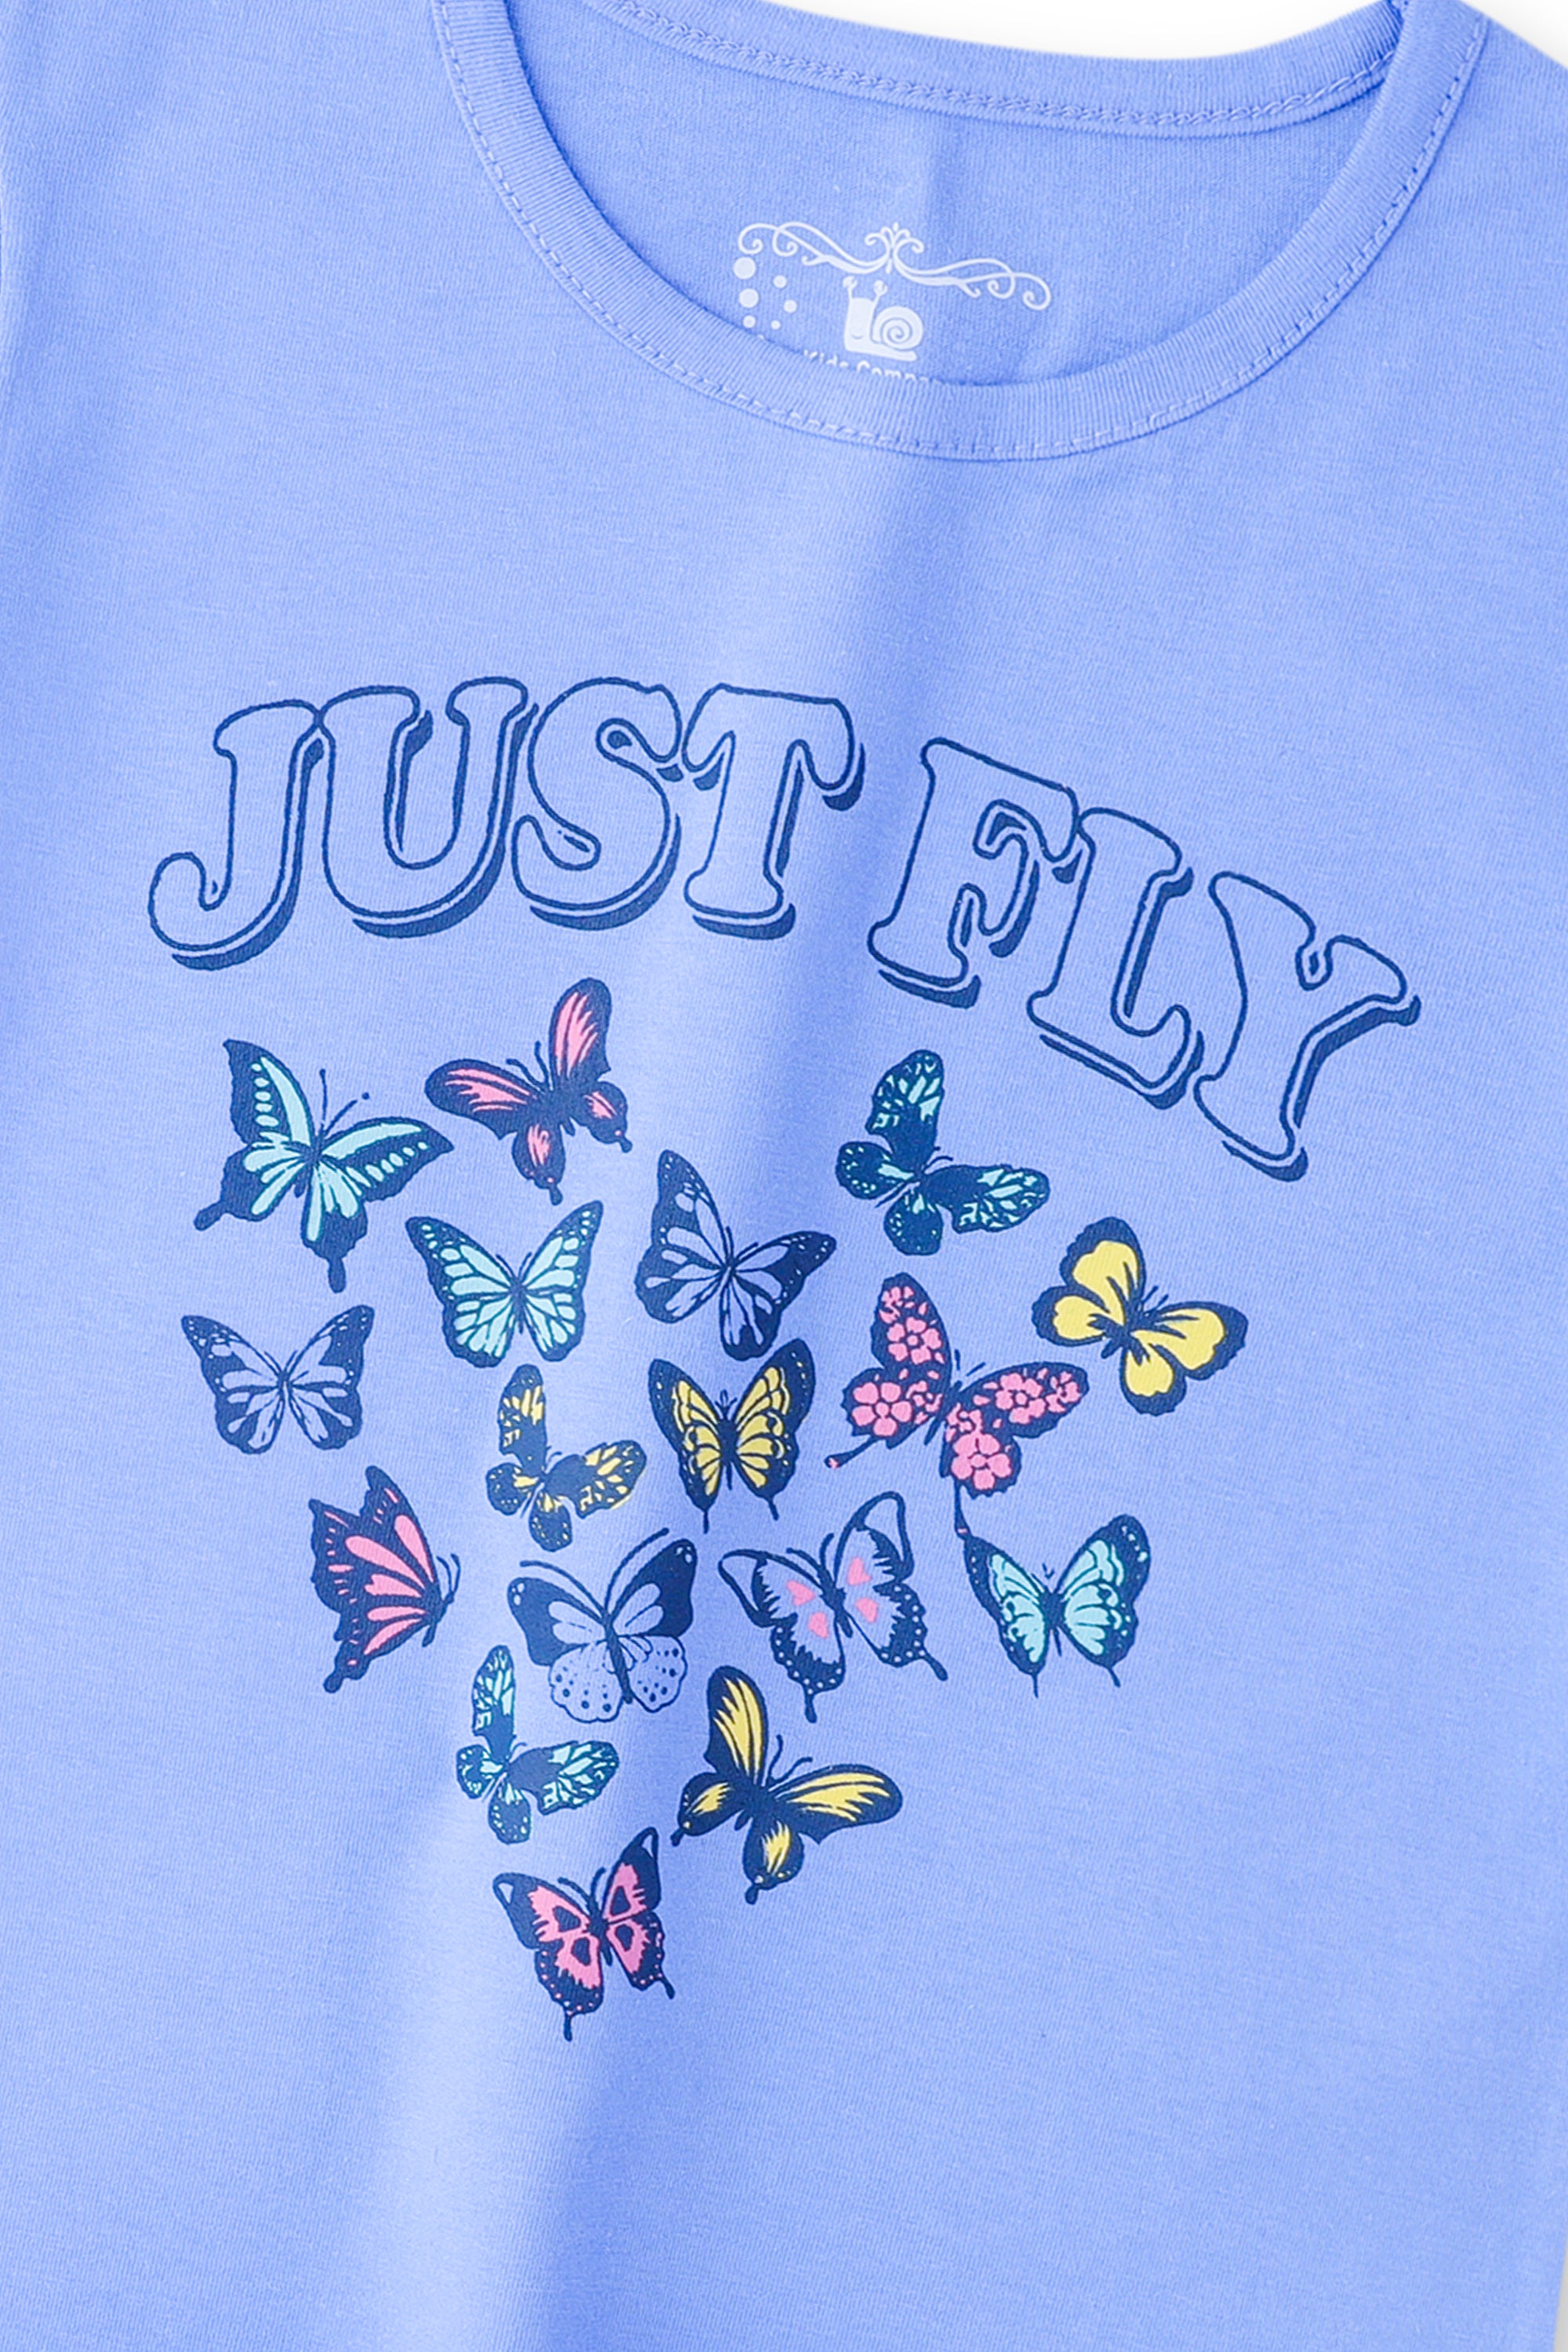 Girls 'Just Fly' T-shirt